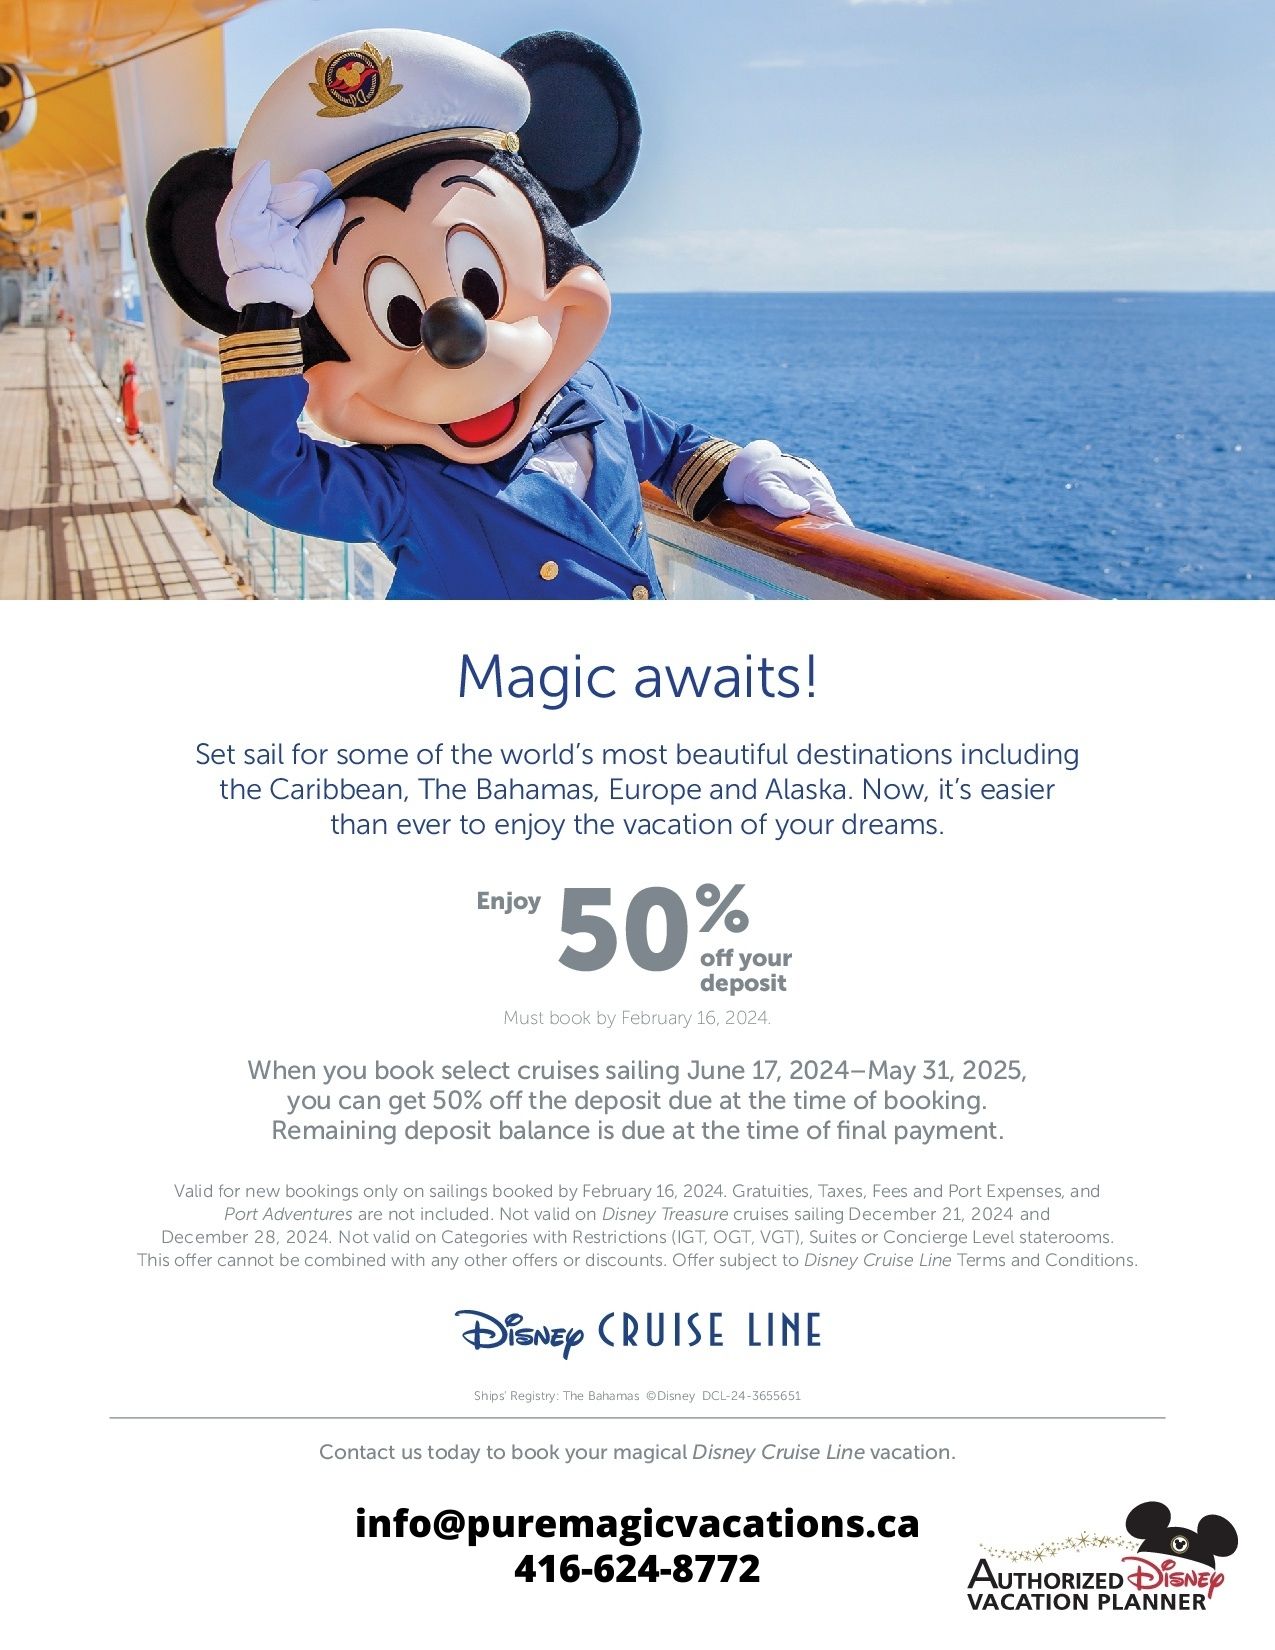 Magic Awaits! Enjoy 50% off your Disney Cruise Line deposit